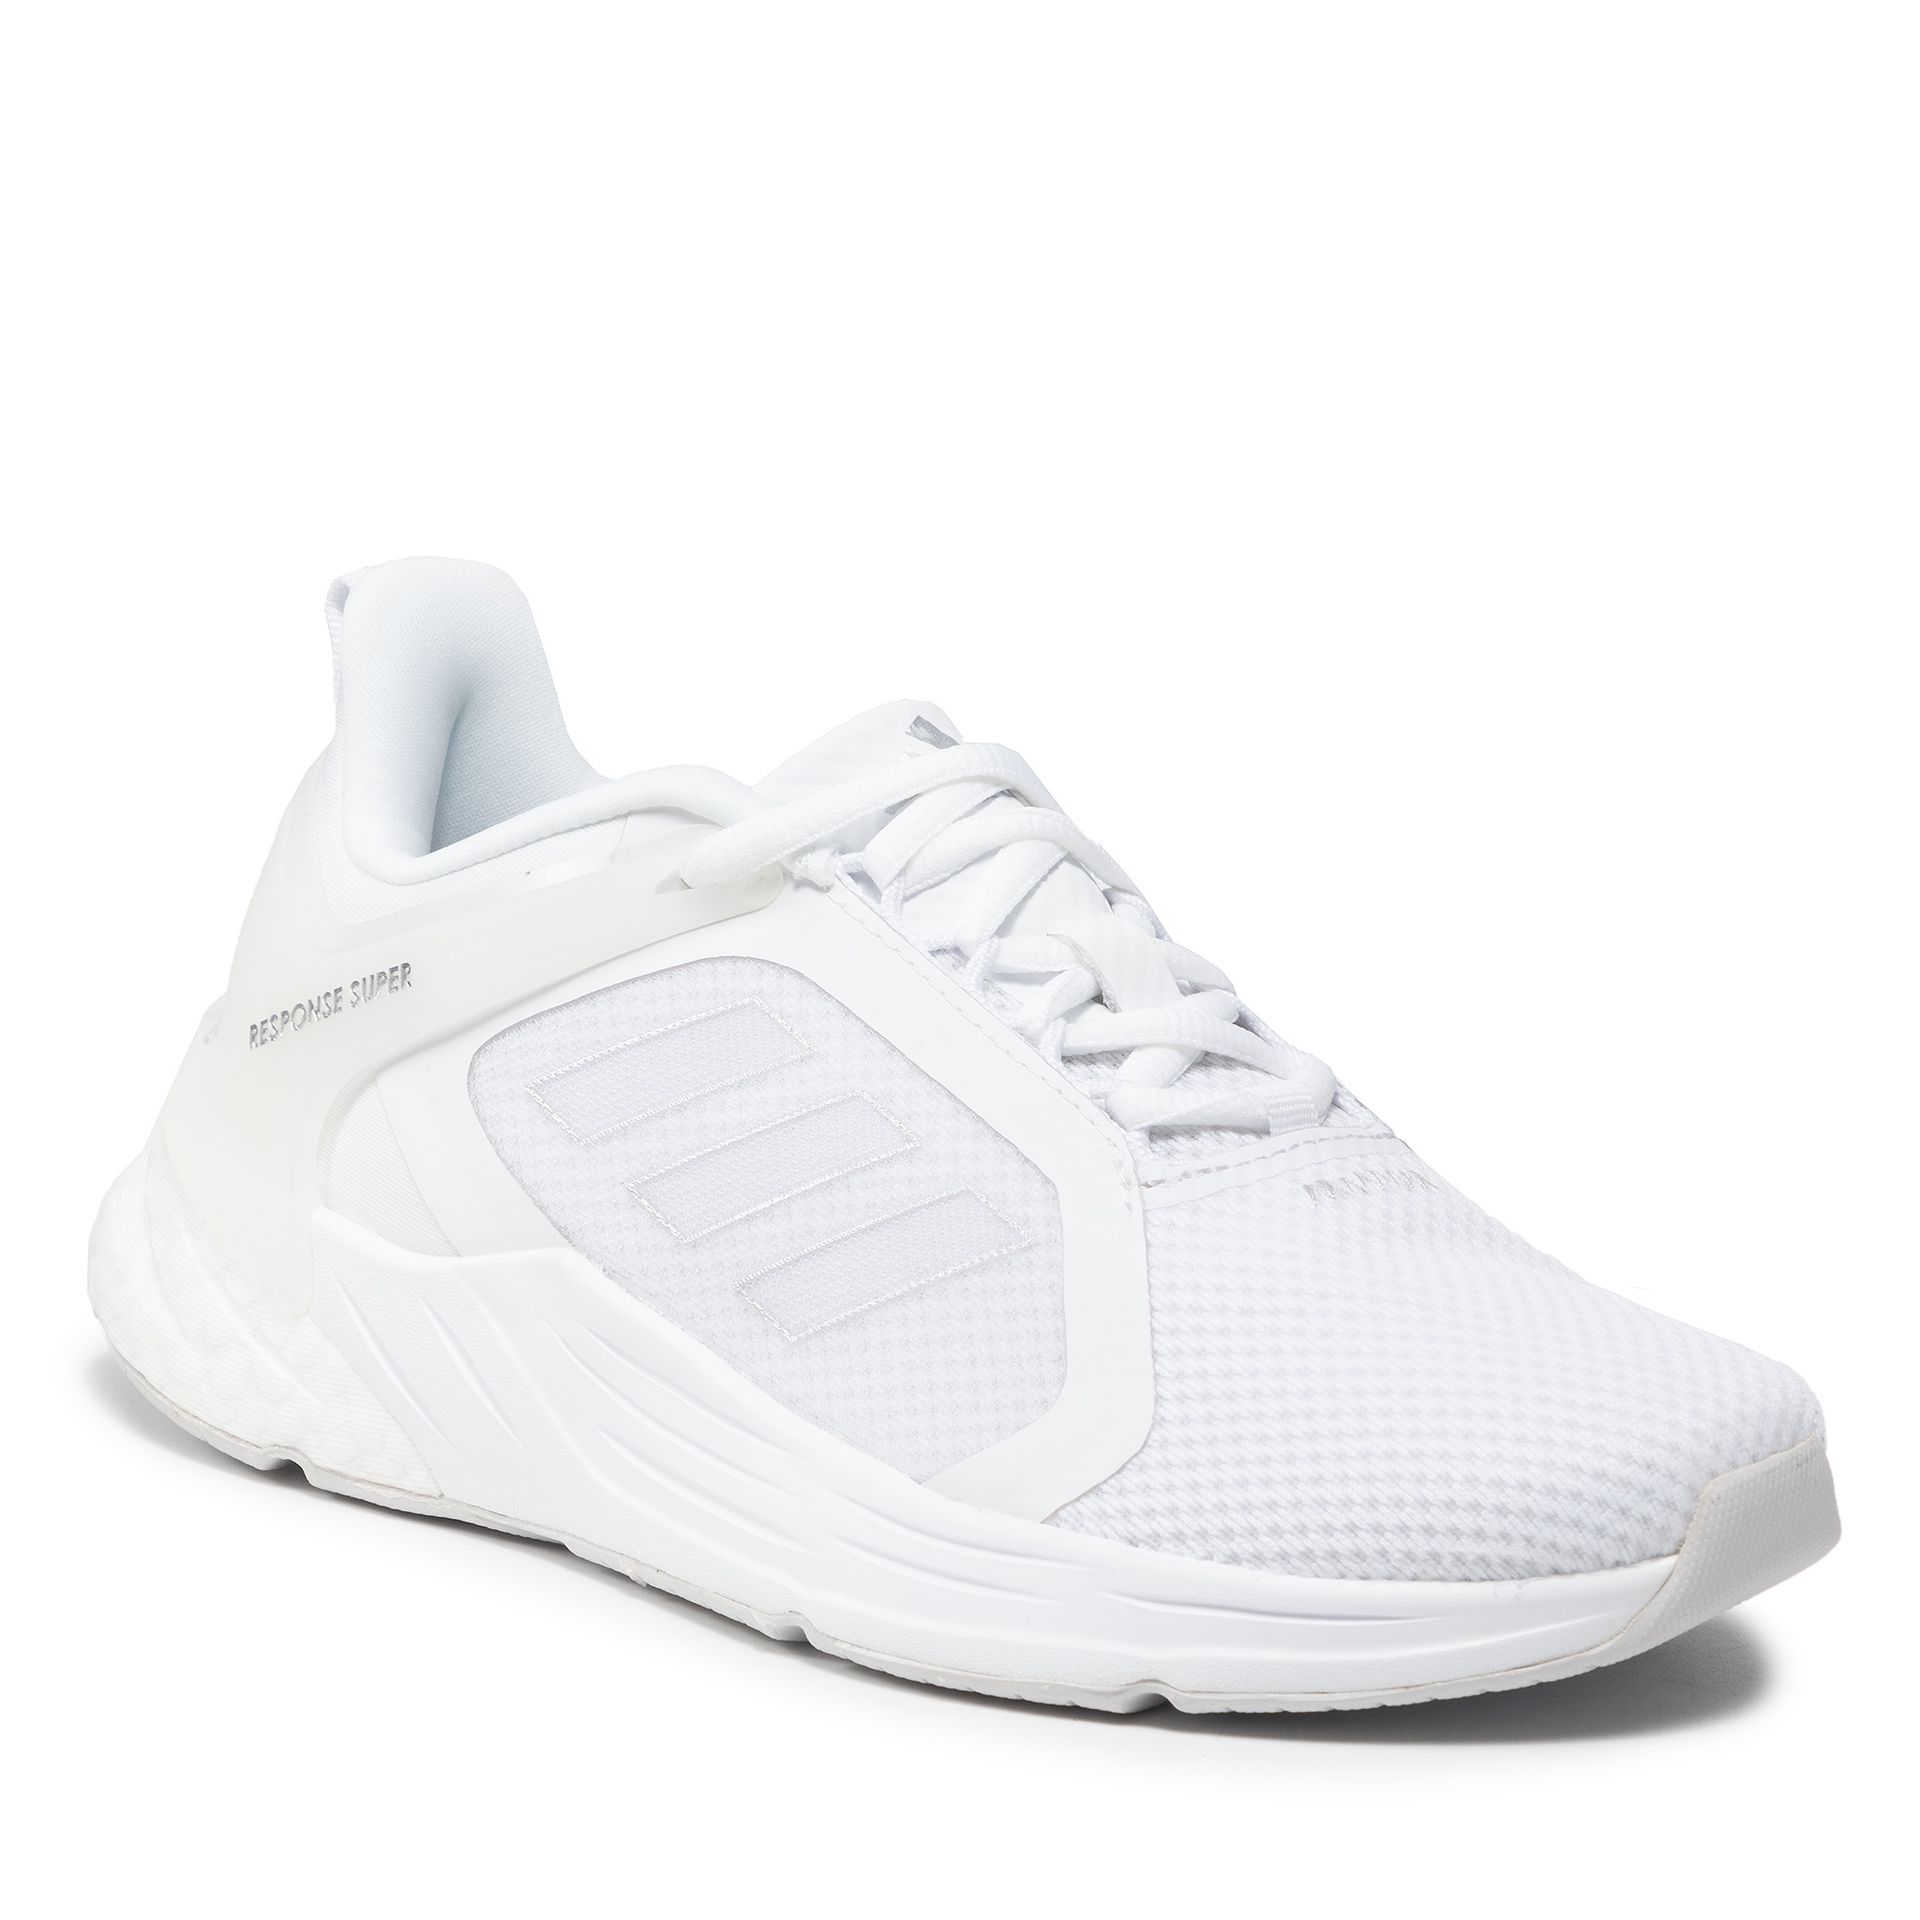 Adidas Buty Response Super 2.0 H02023 White